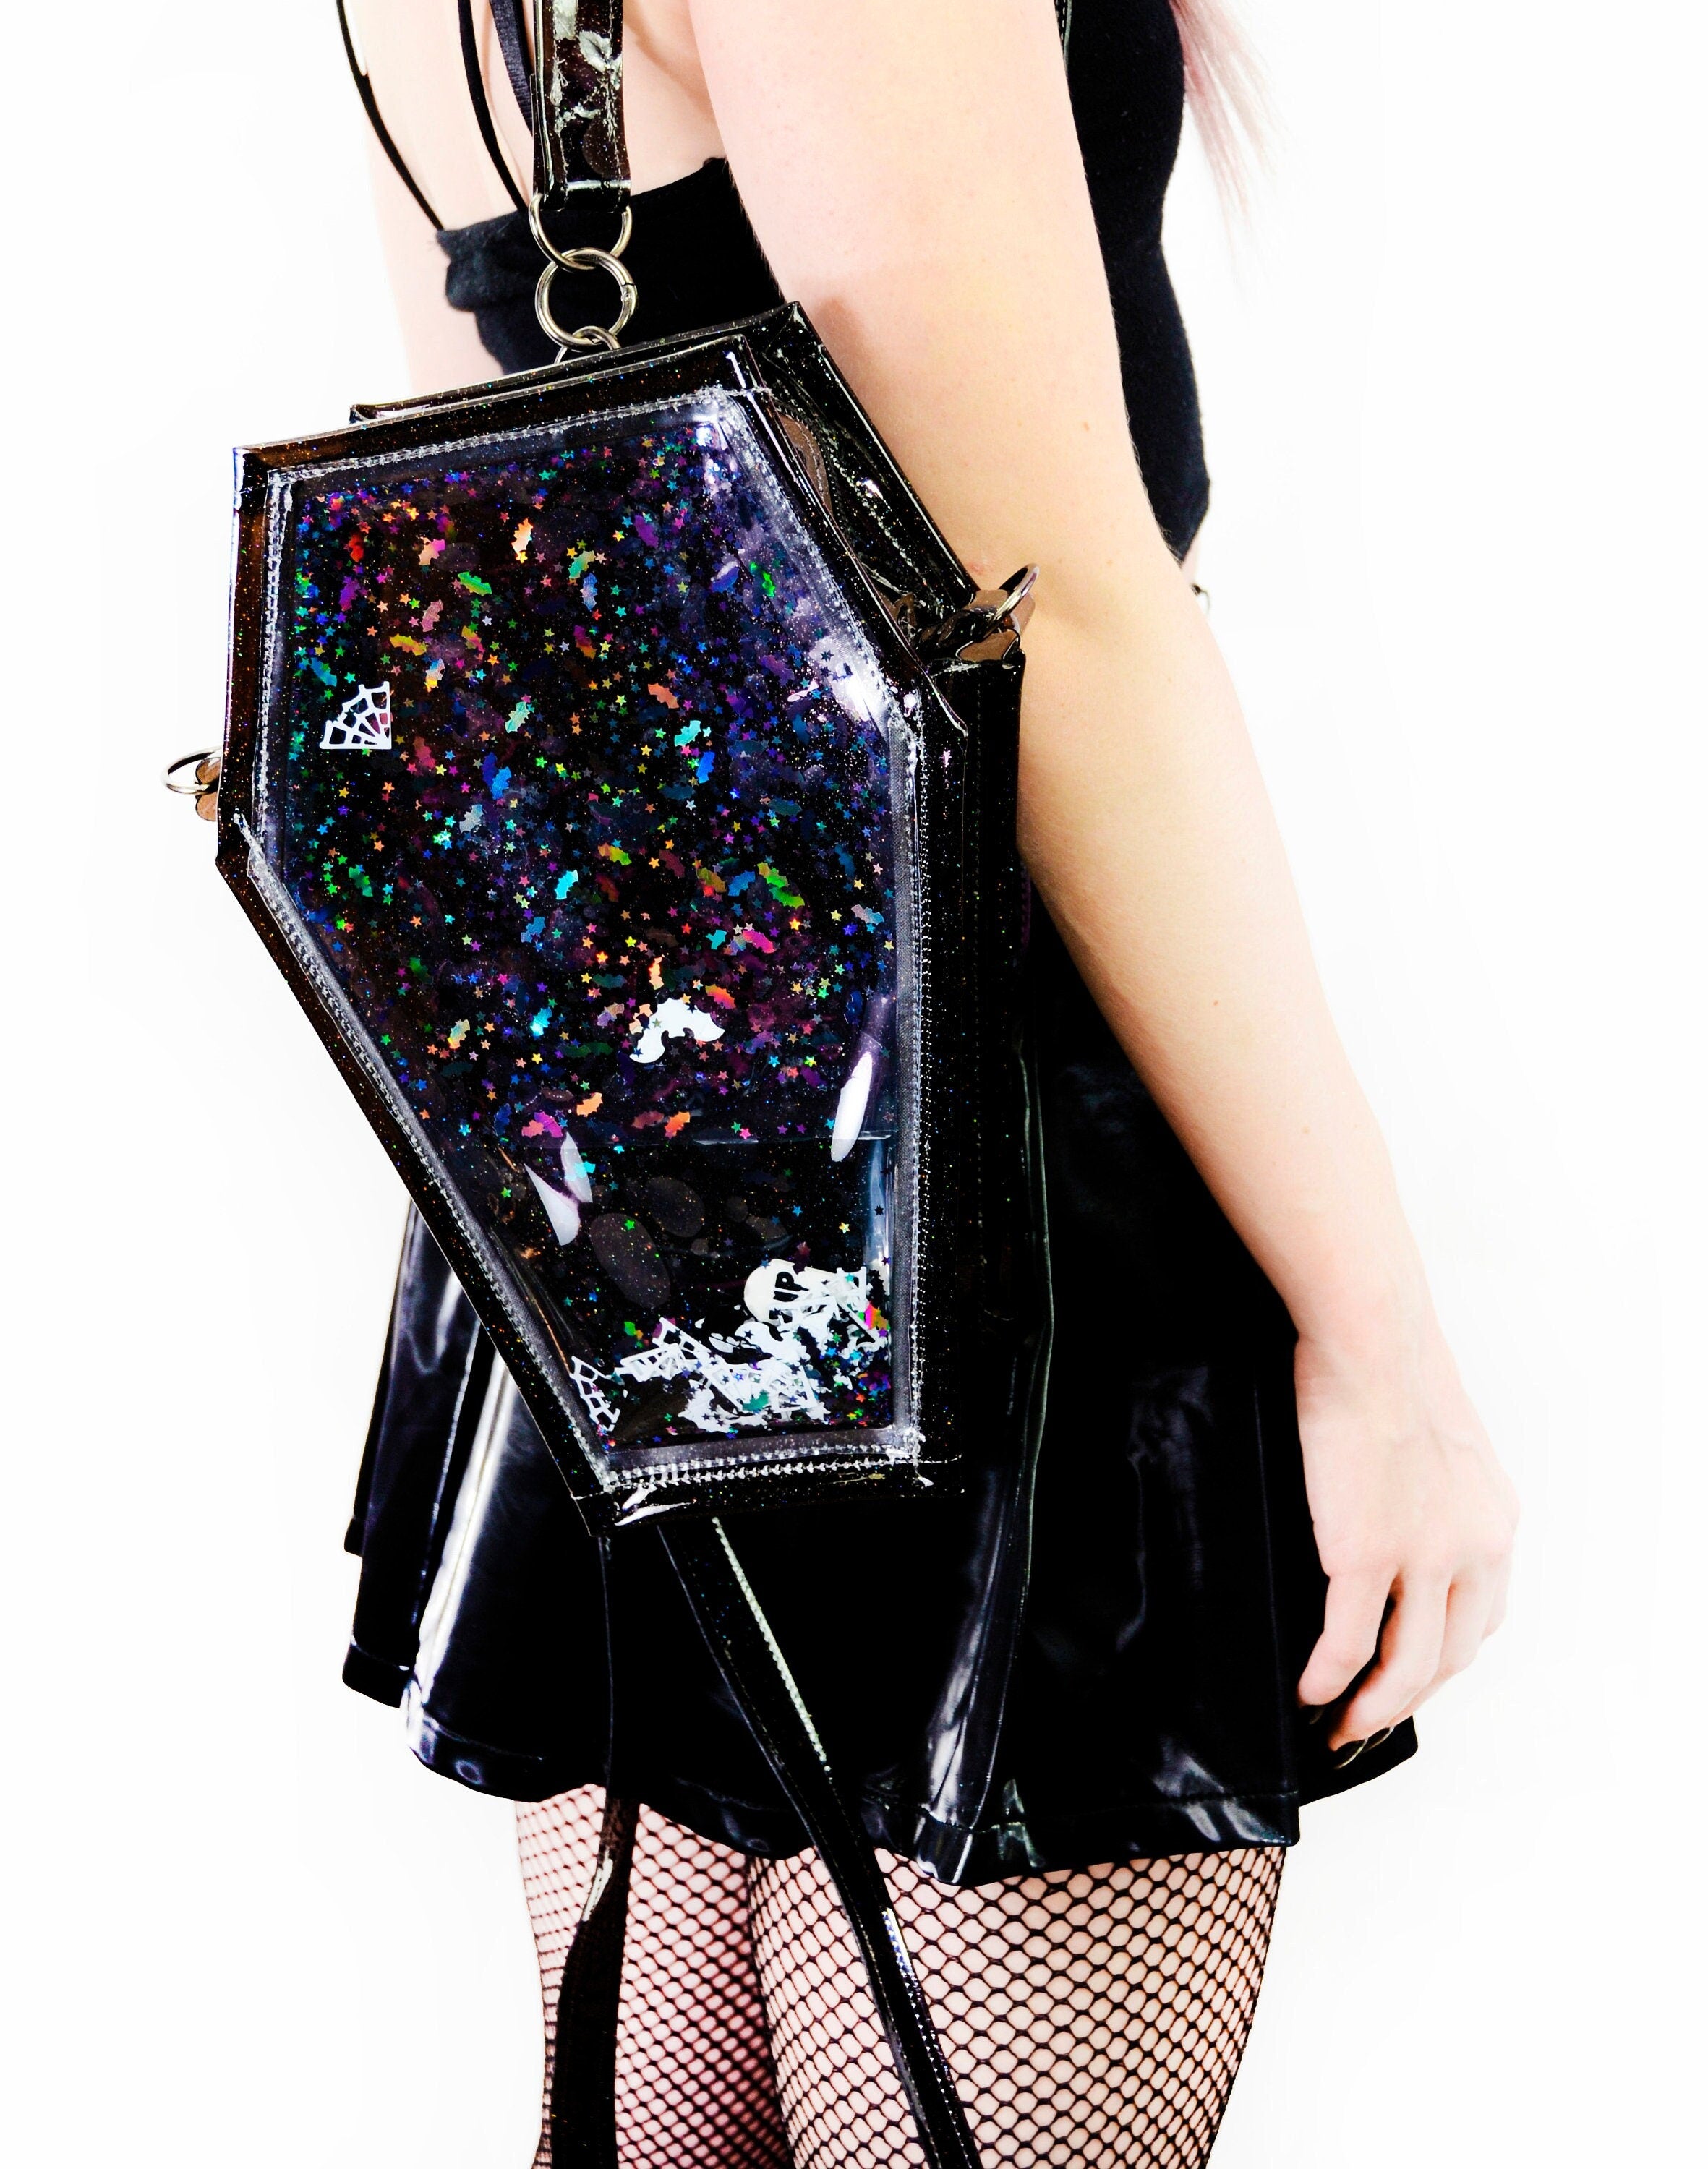 Liquid Glitter Coffin 2 in 1 Backpack/ Crossbody Bag - Living Dead Girl - Electric Bubblegum